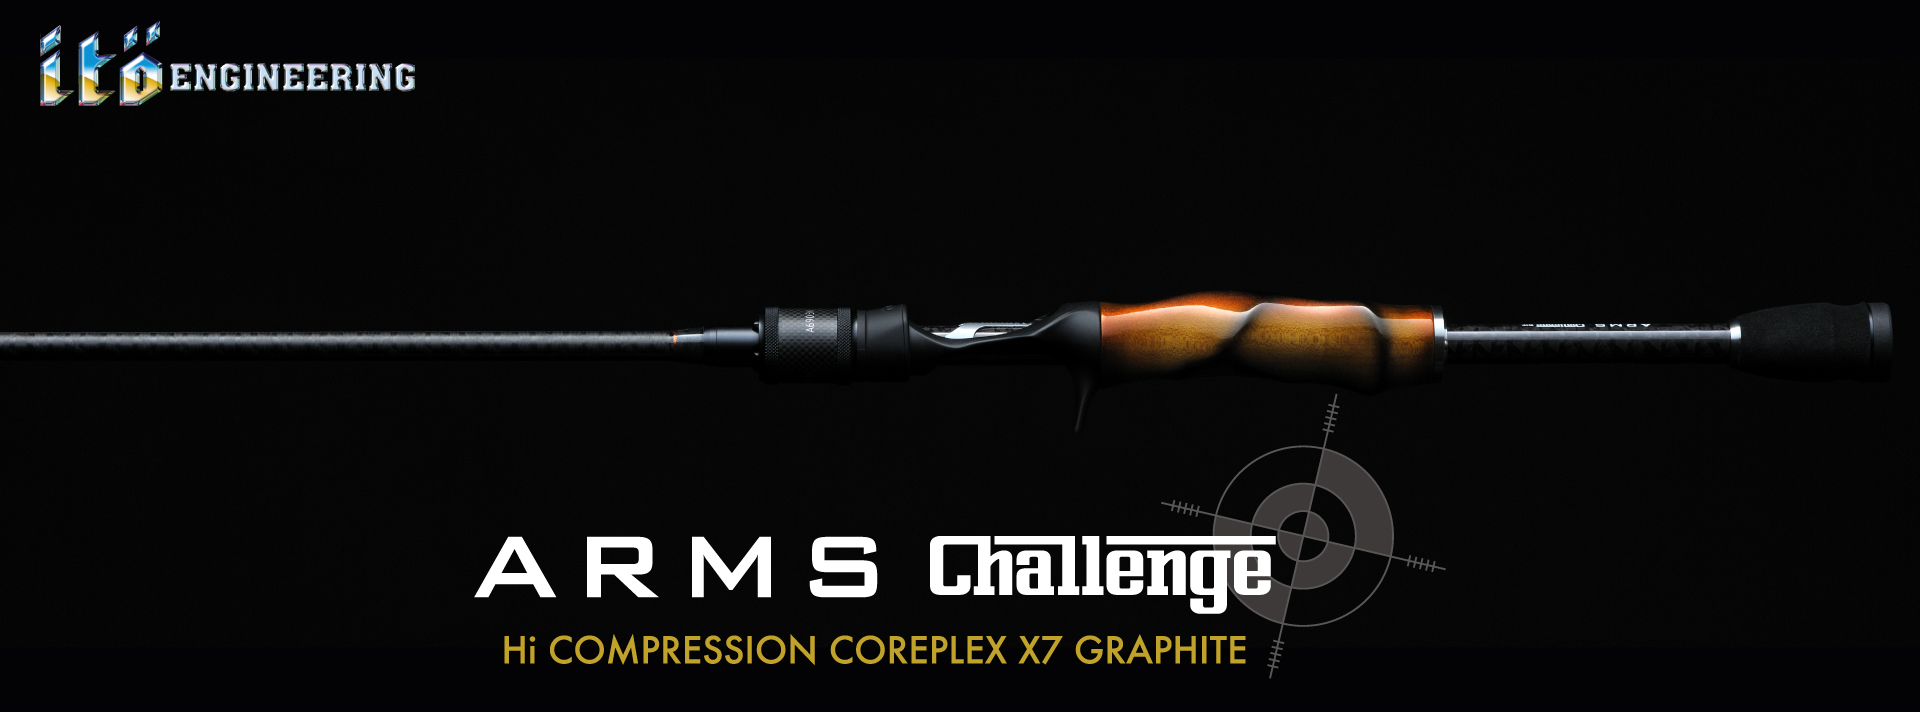 ARMS CHALLENGE | FRESHWATER | Megabass-メガバス